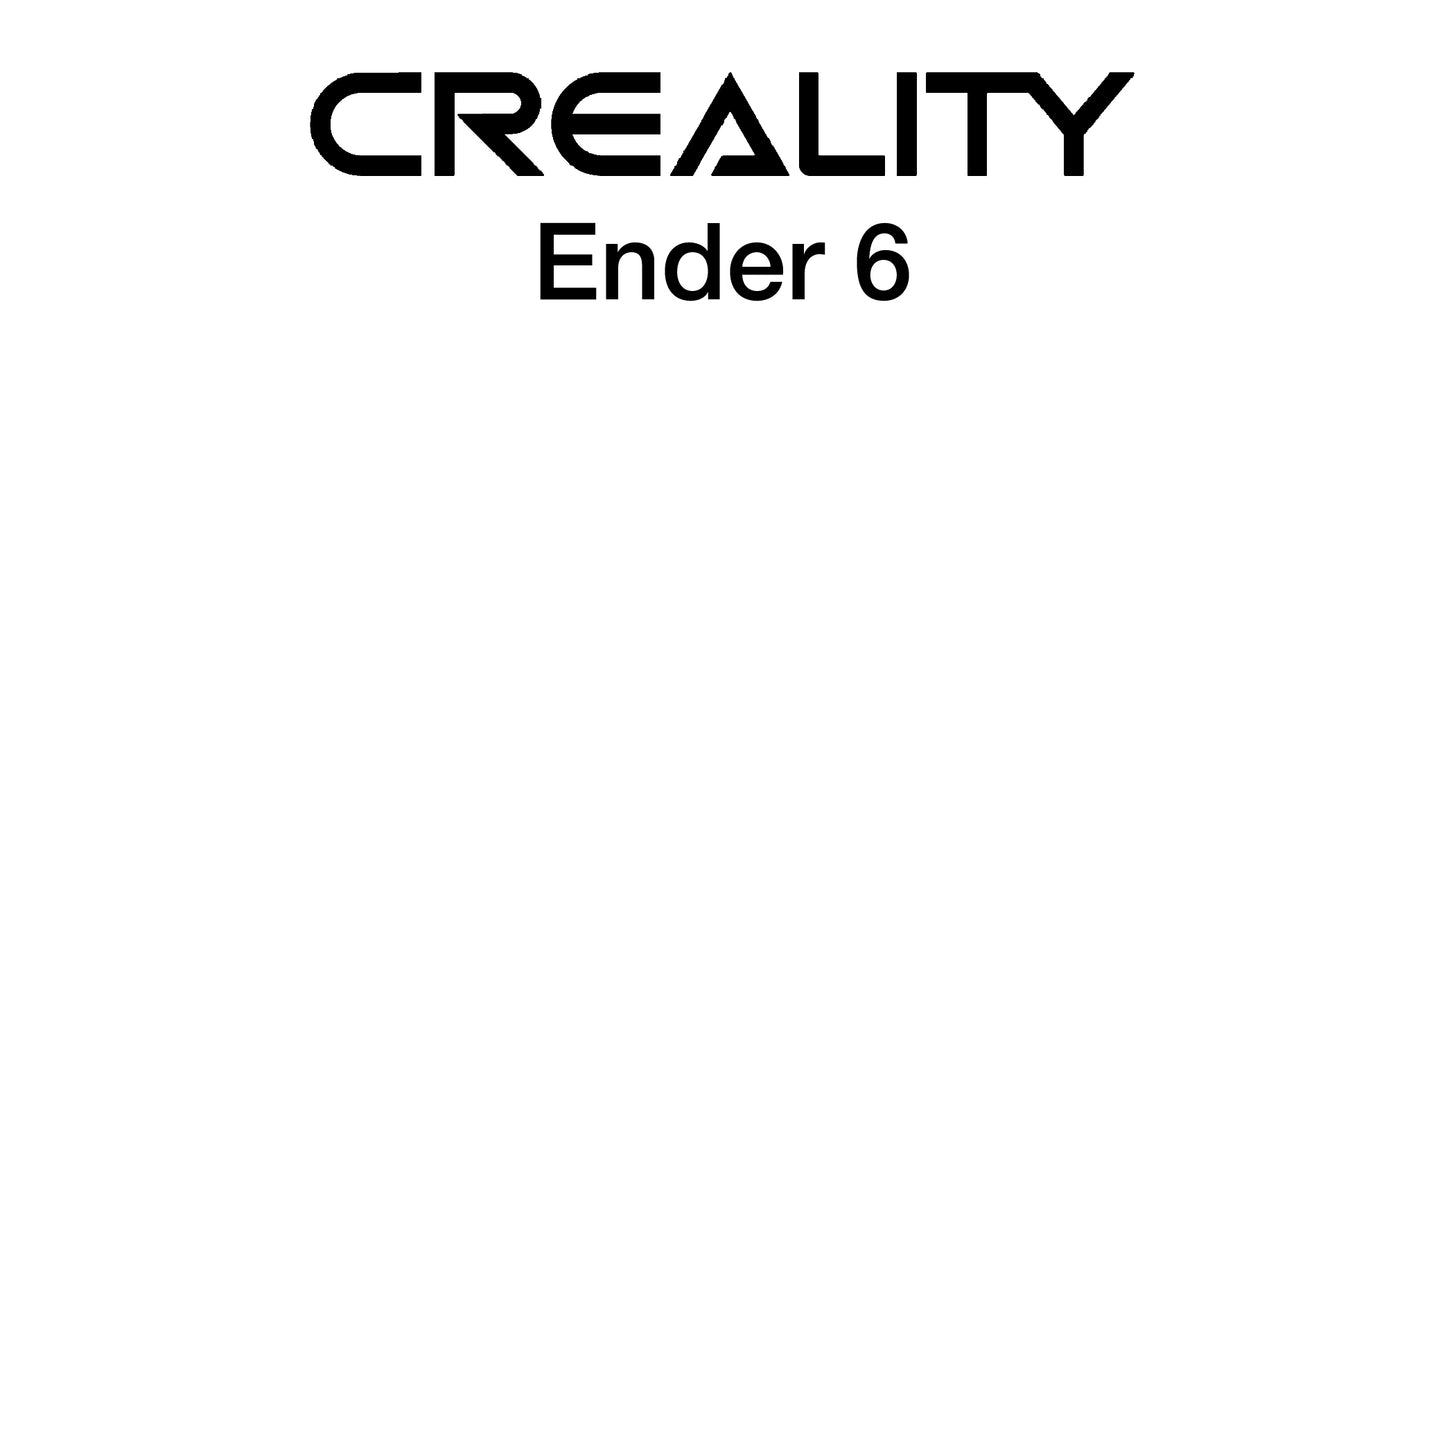 Kit with PEX - Creality Ender 6 - 290 x 290